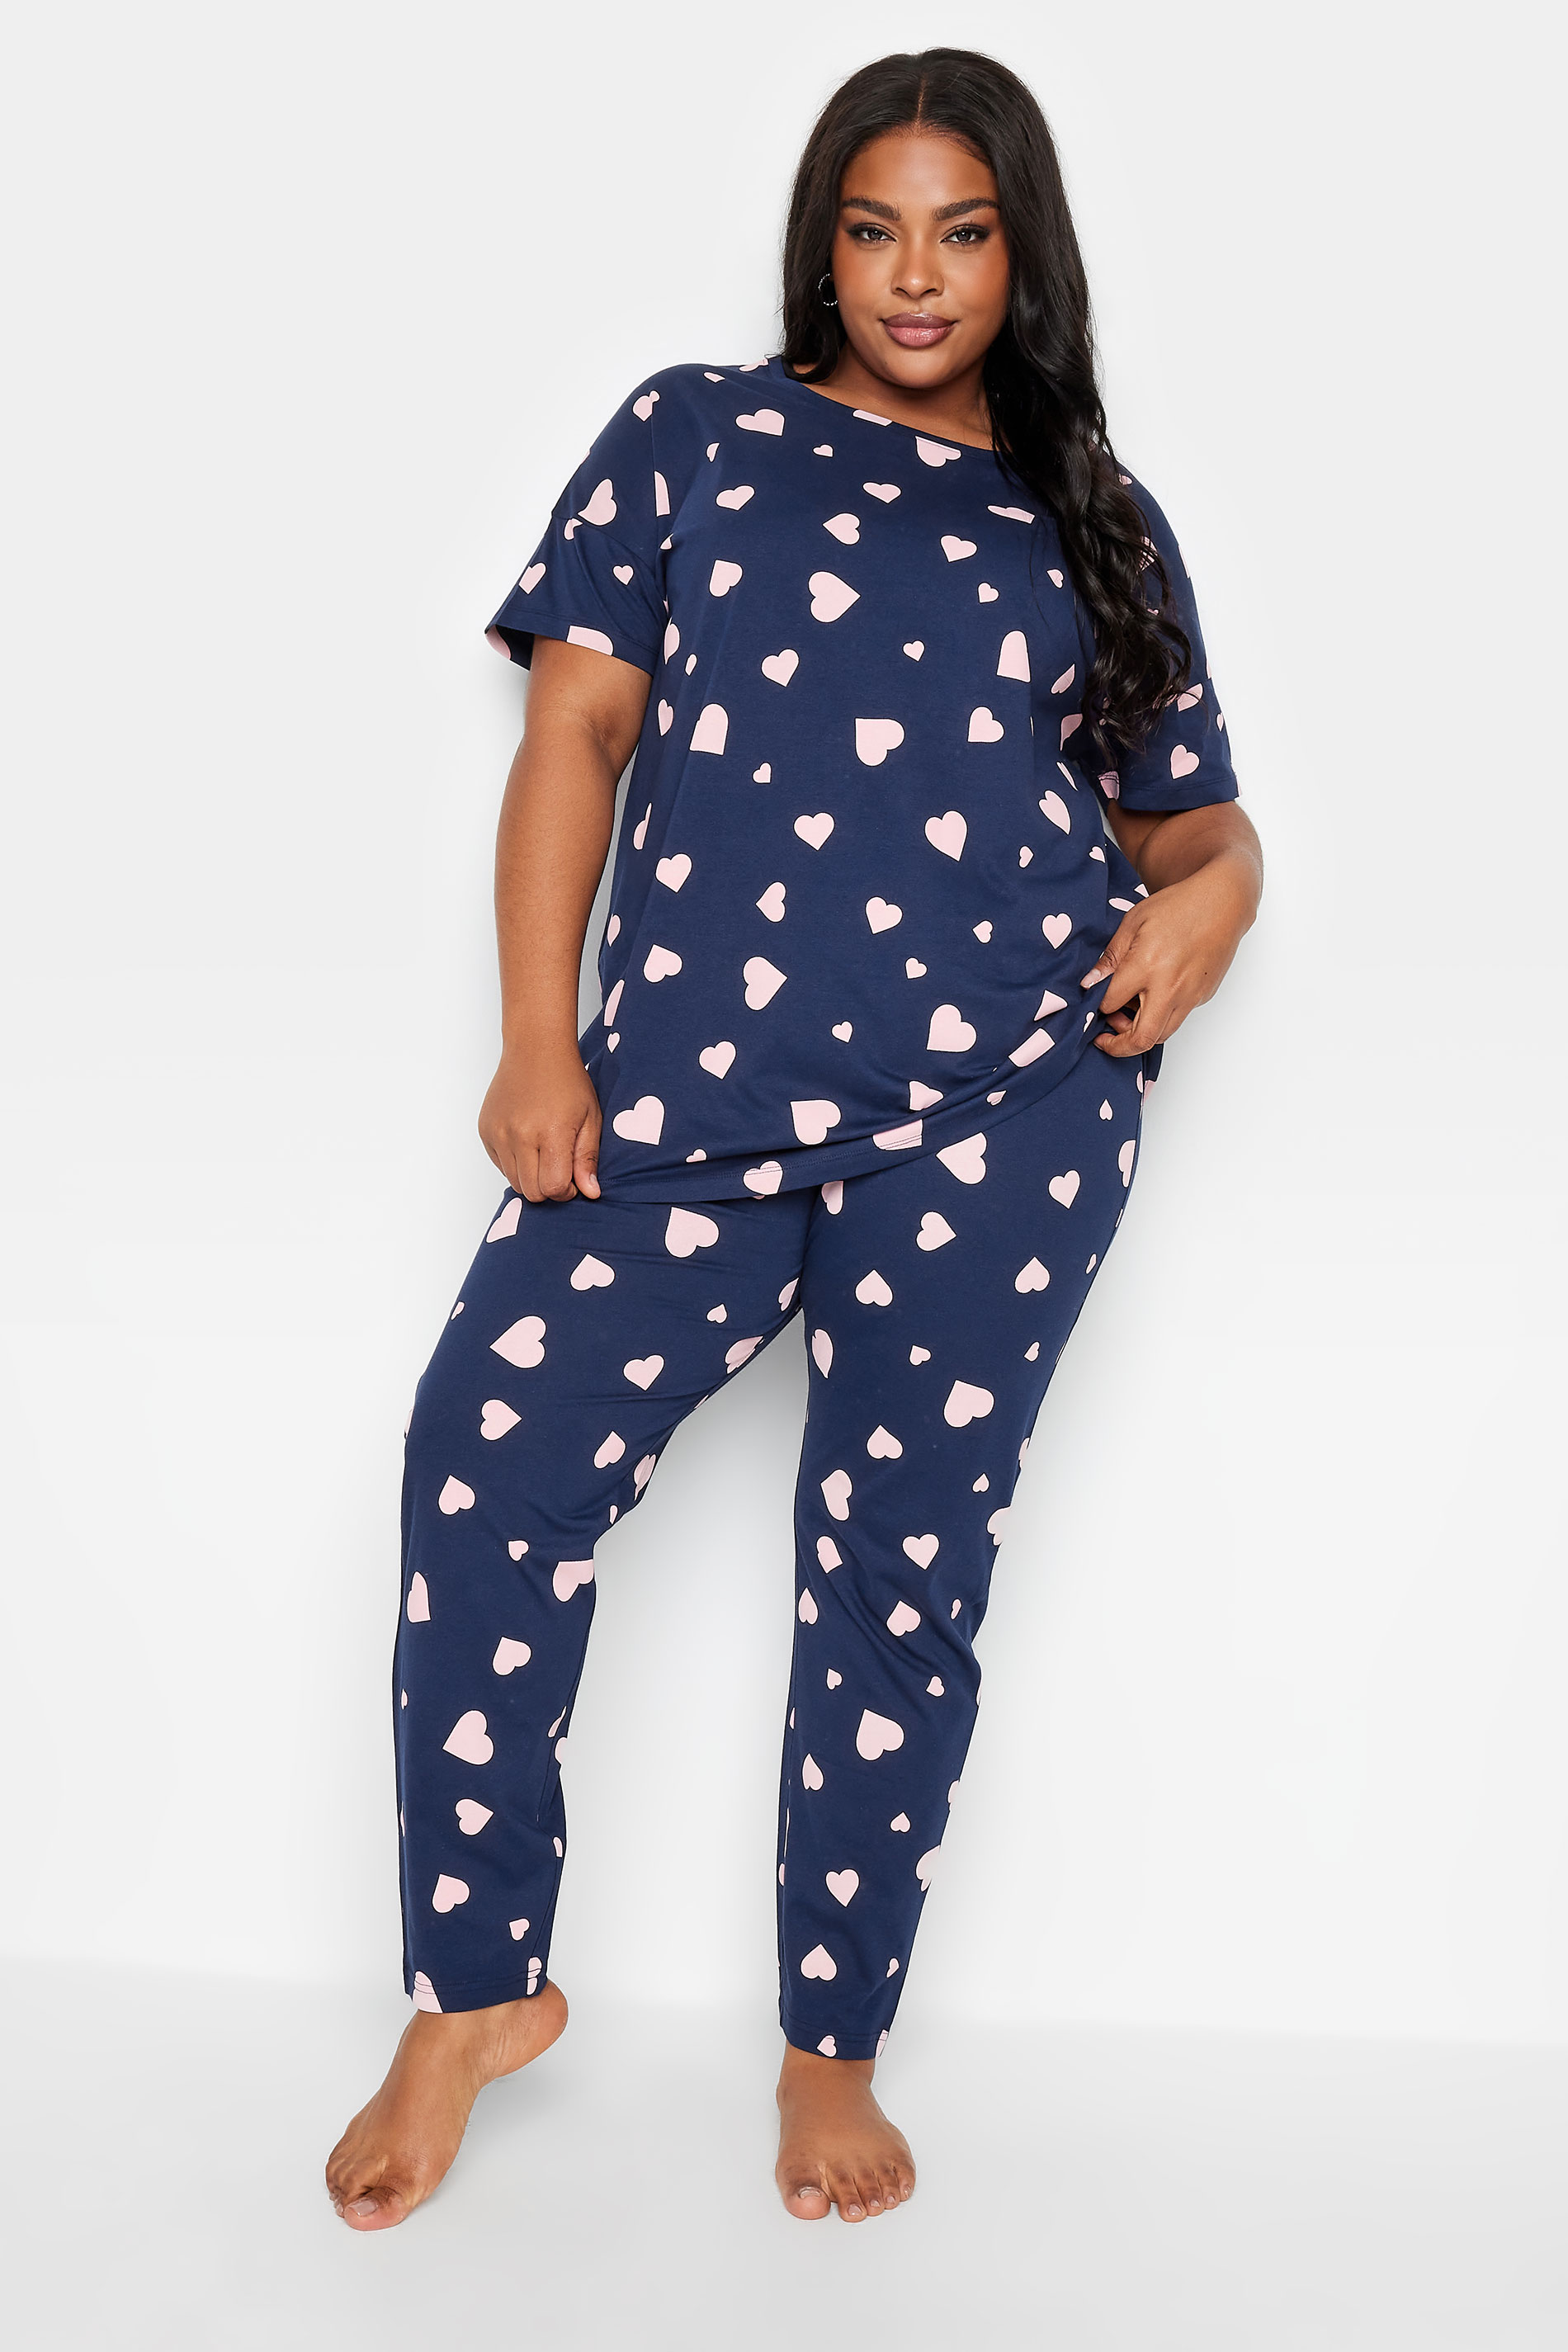 YOURS Plus Size Navy Blue Heart Print Pyjama Set | Yours Clothing 2